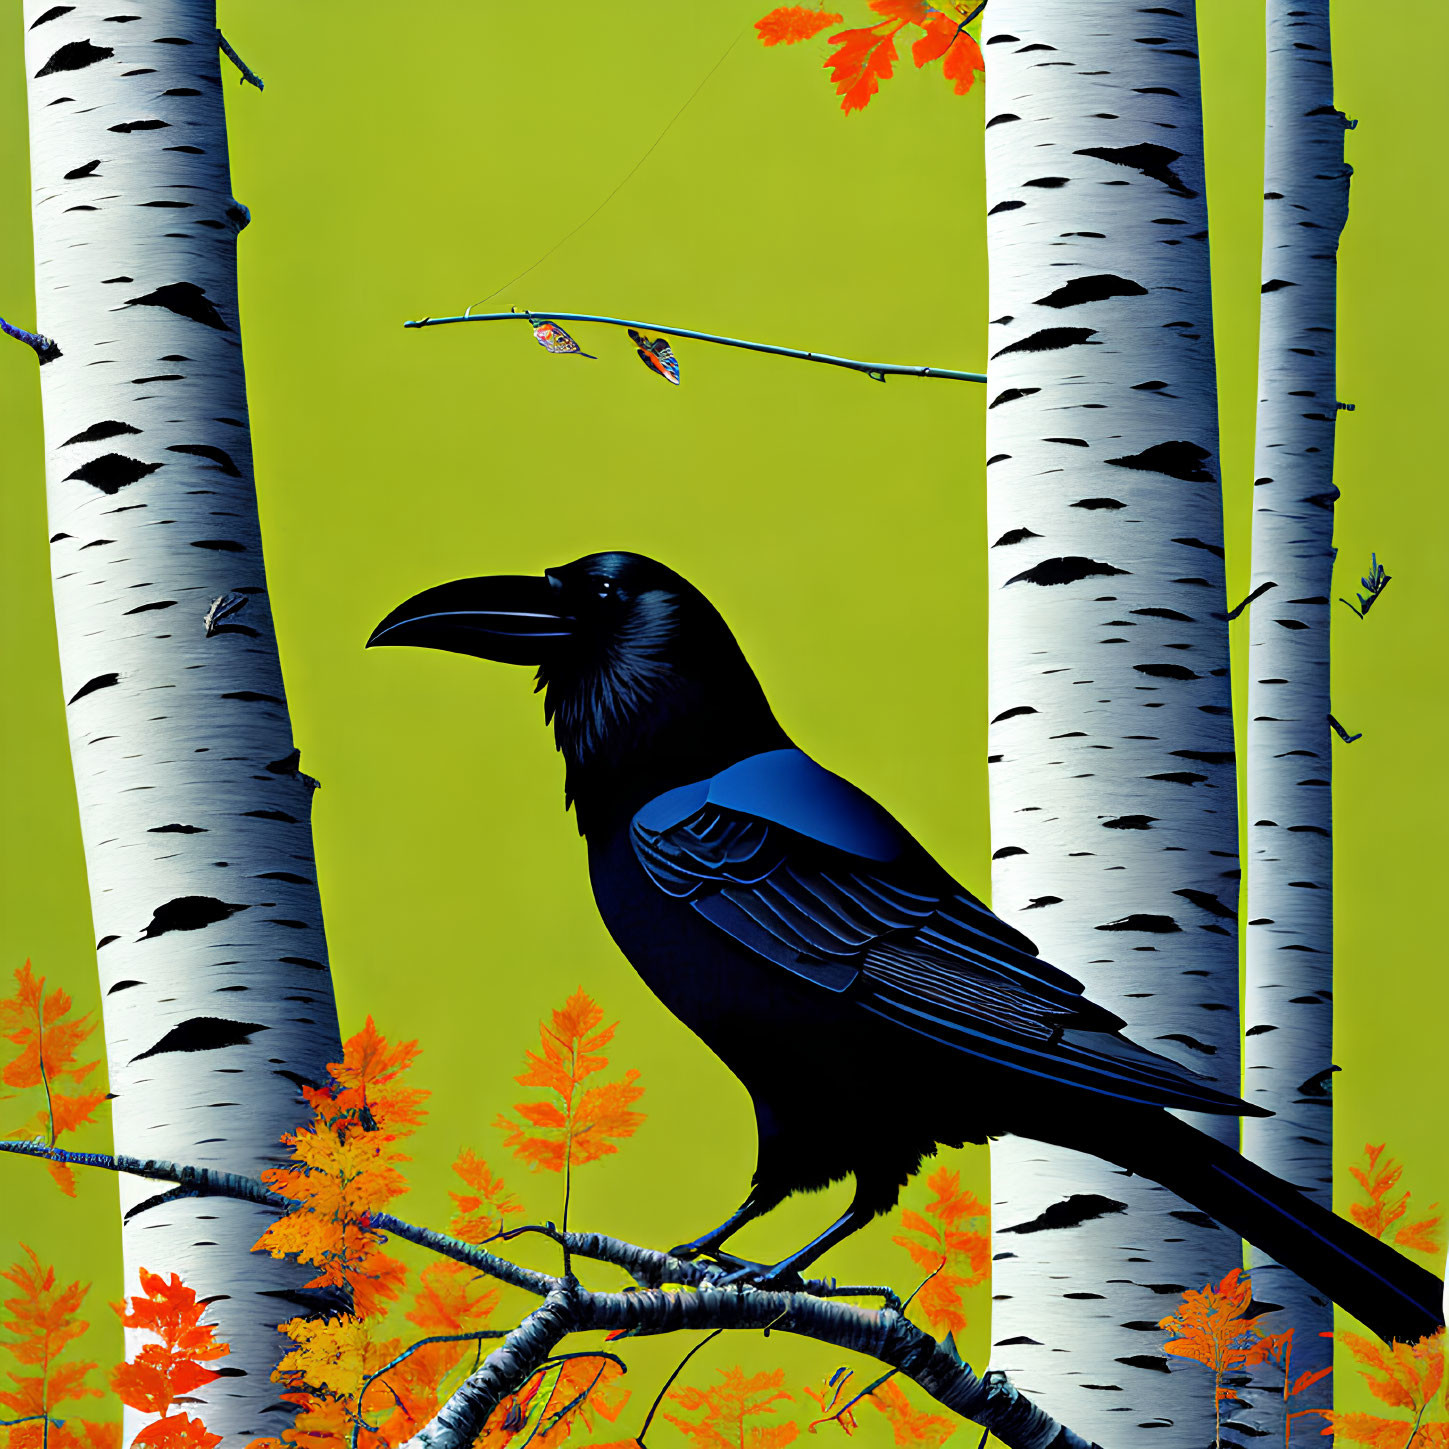 Detailed illustration of black raven on birch branch with orange leaves